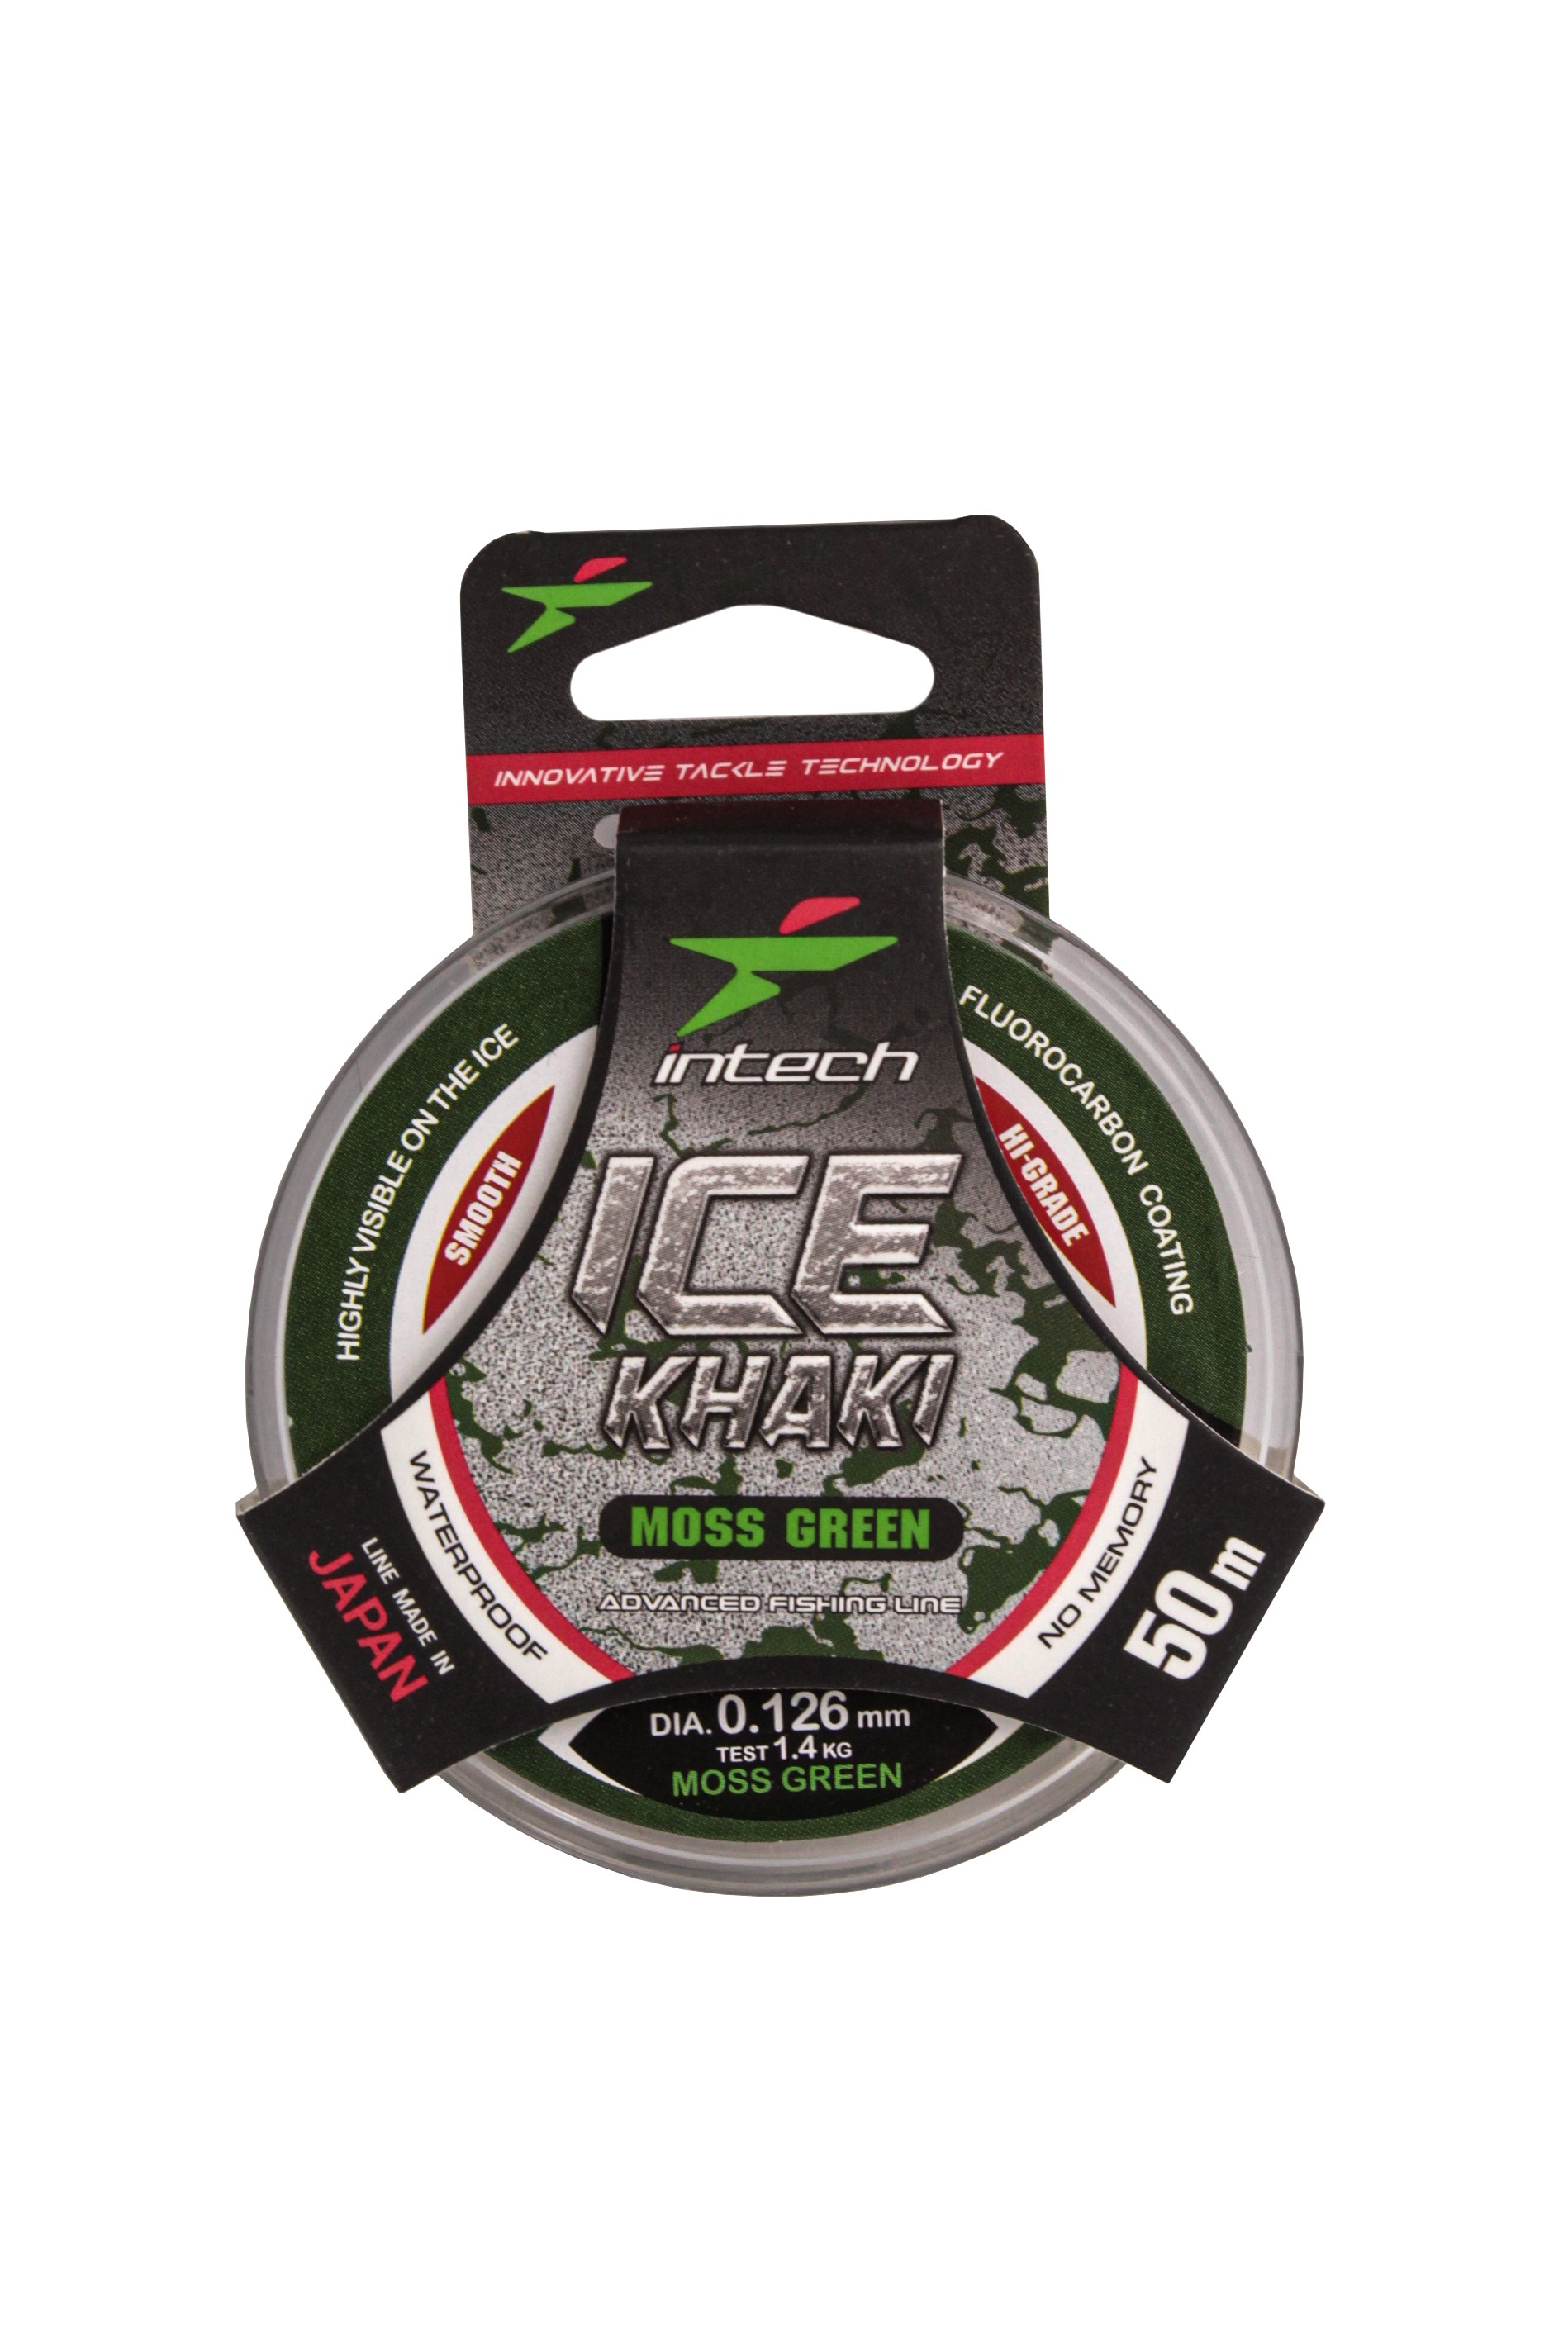 Леска Intech Ice Khaki moss green 50м 0.126мм 1.4кг - фото 1